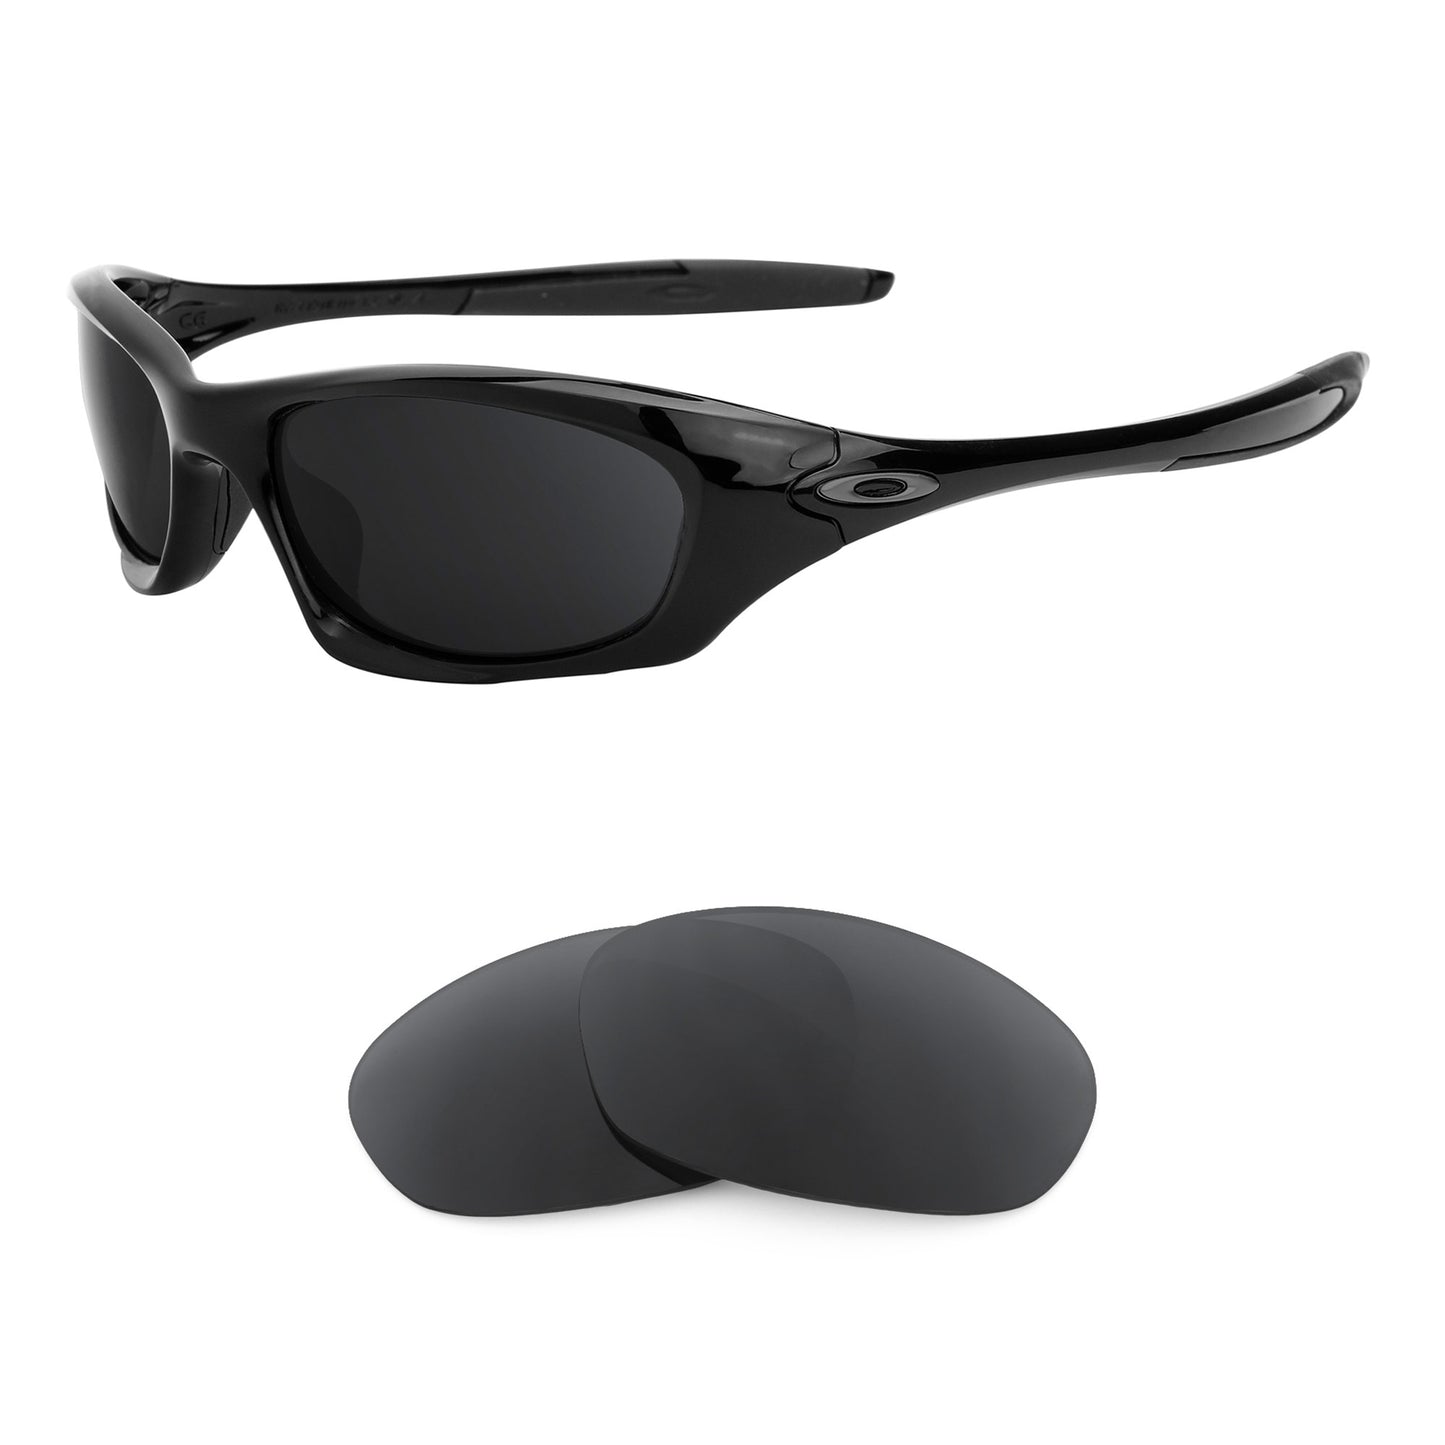 Oakley Twenty XX (2012) sunglasses with replacement lenses